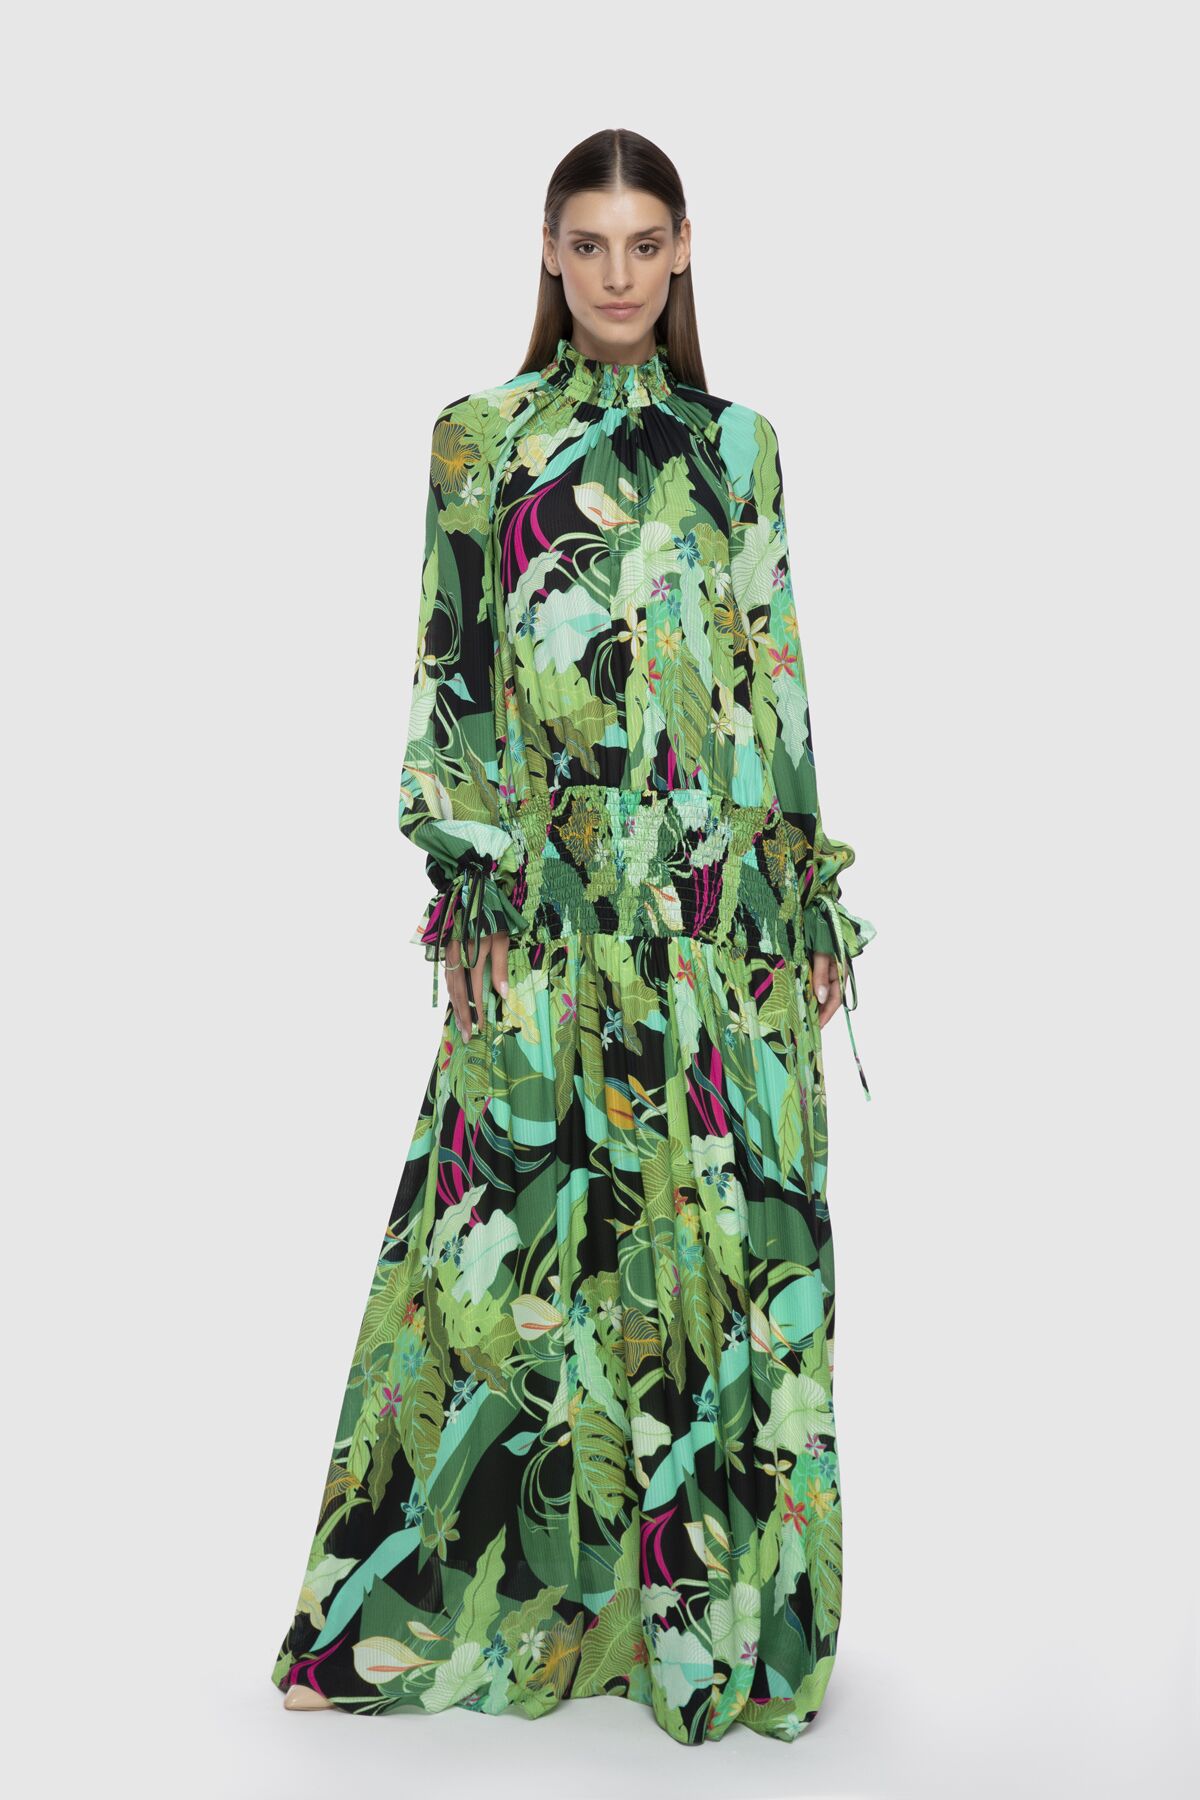  GIZIA - Elastic Detailed Patterned Green Long Dress